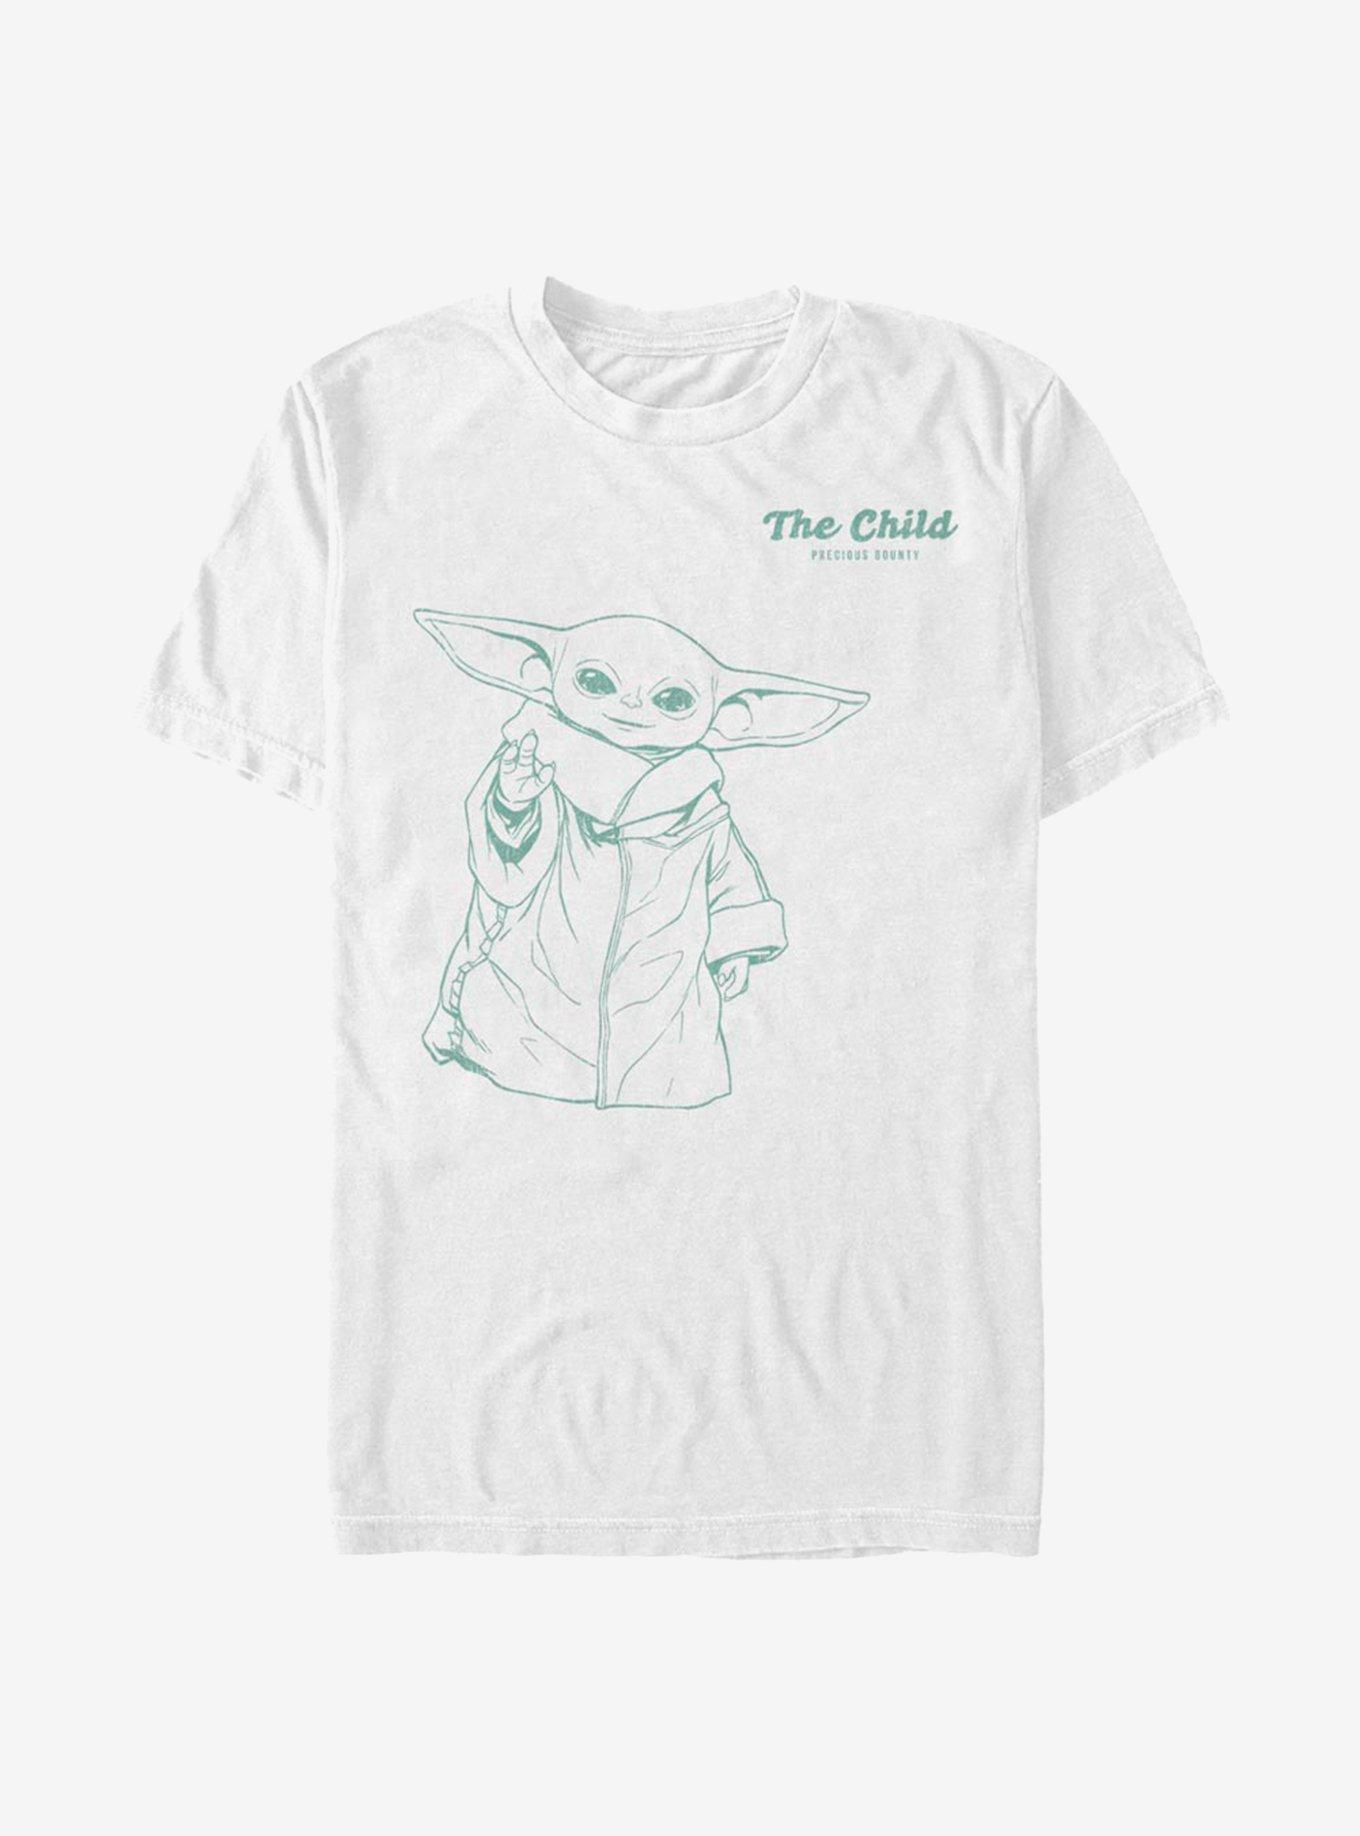 Star Wars The Mandalorian Playful Child T-Shirt